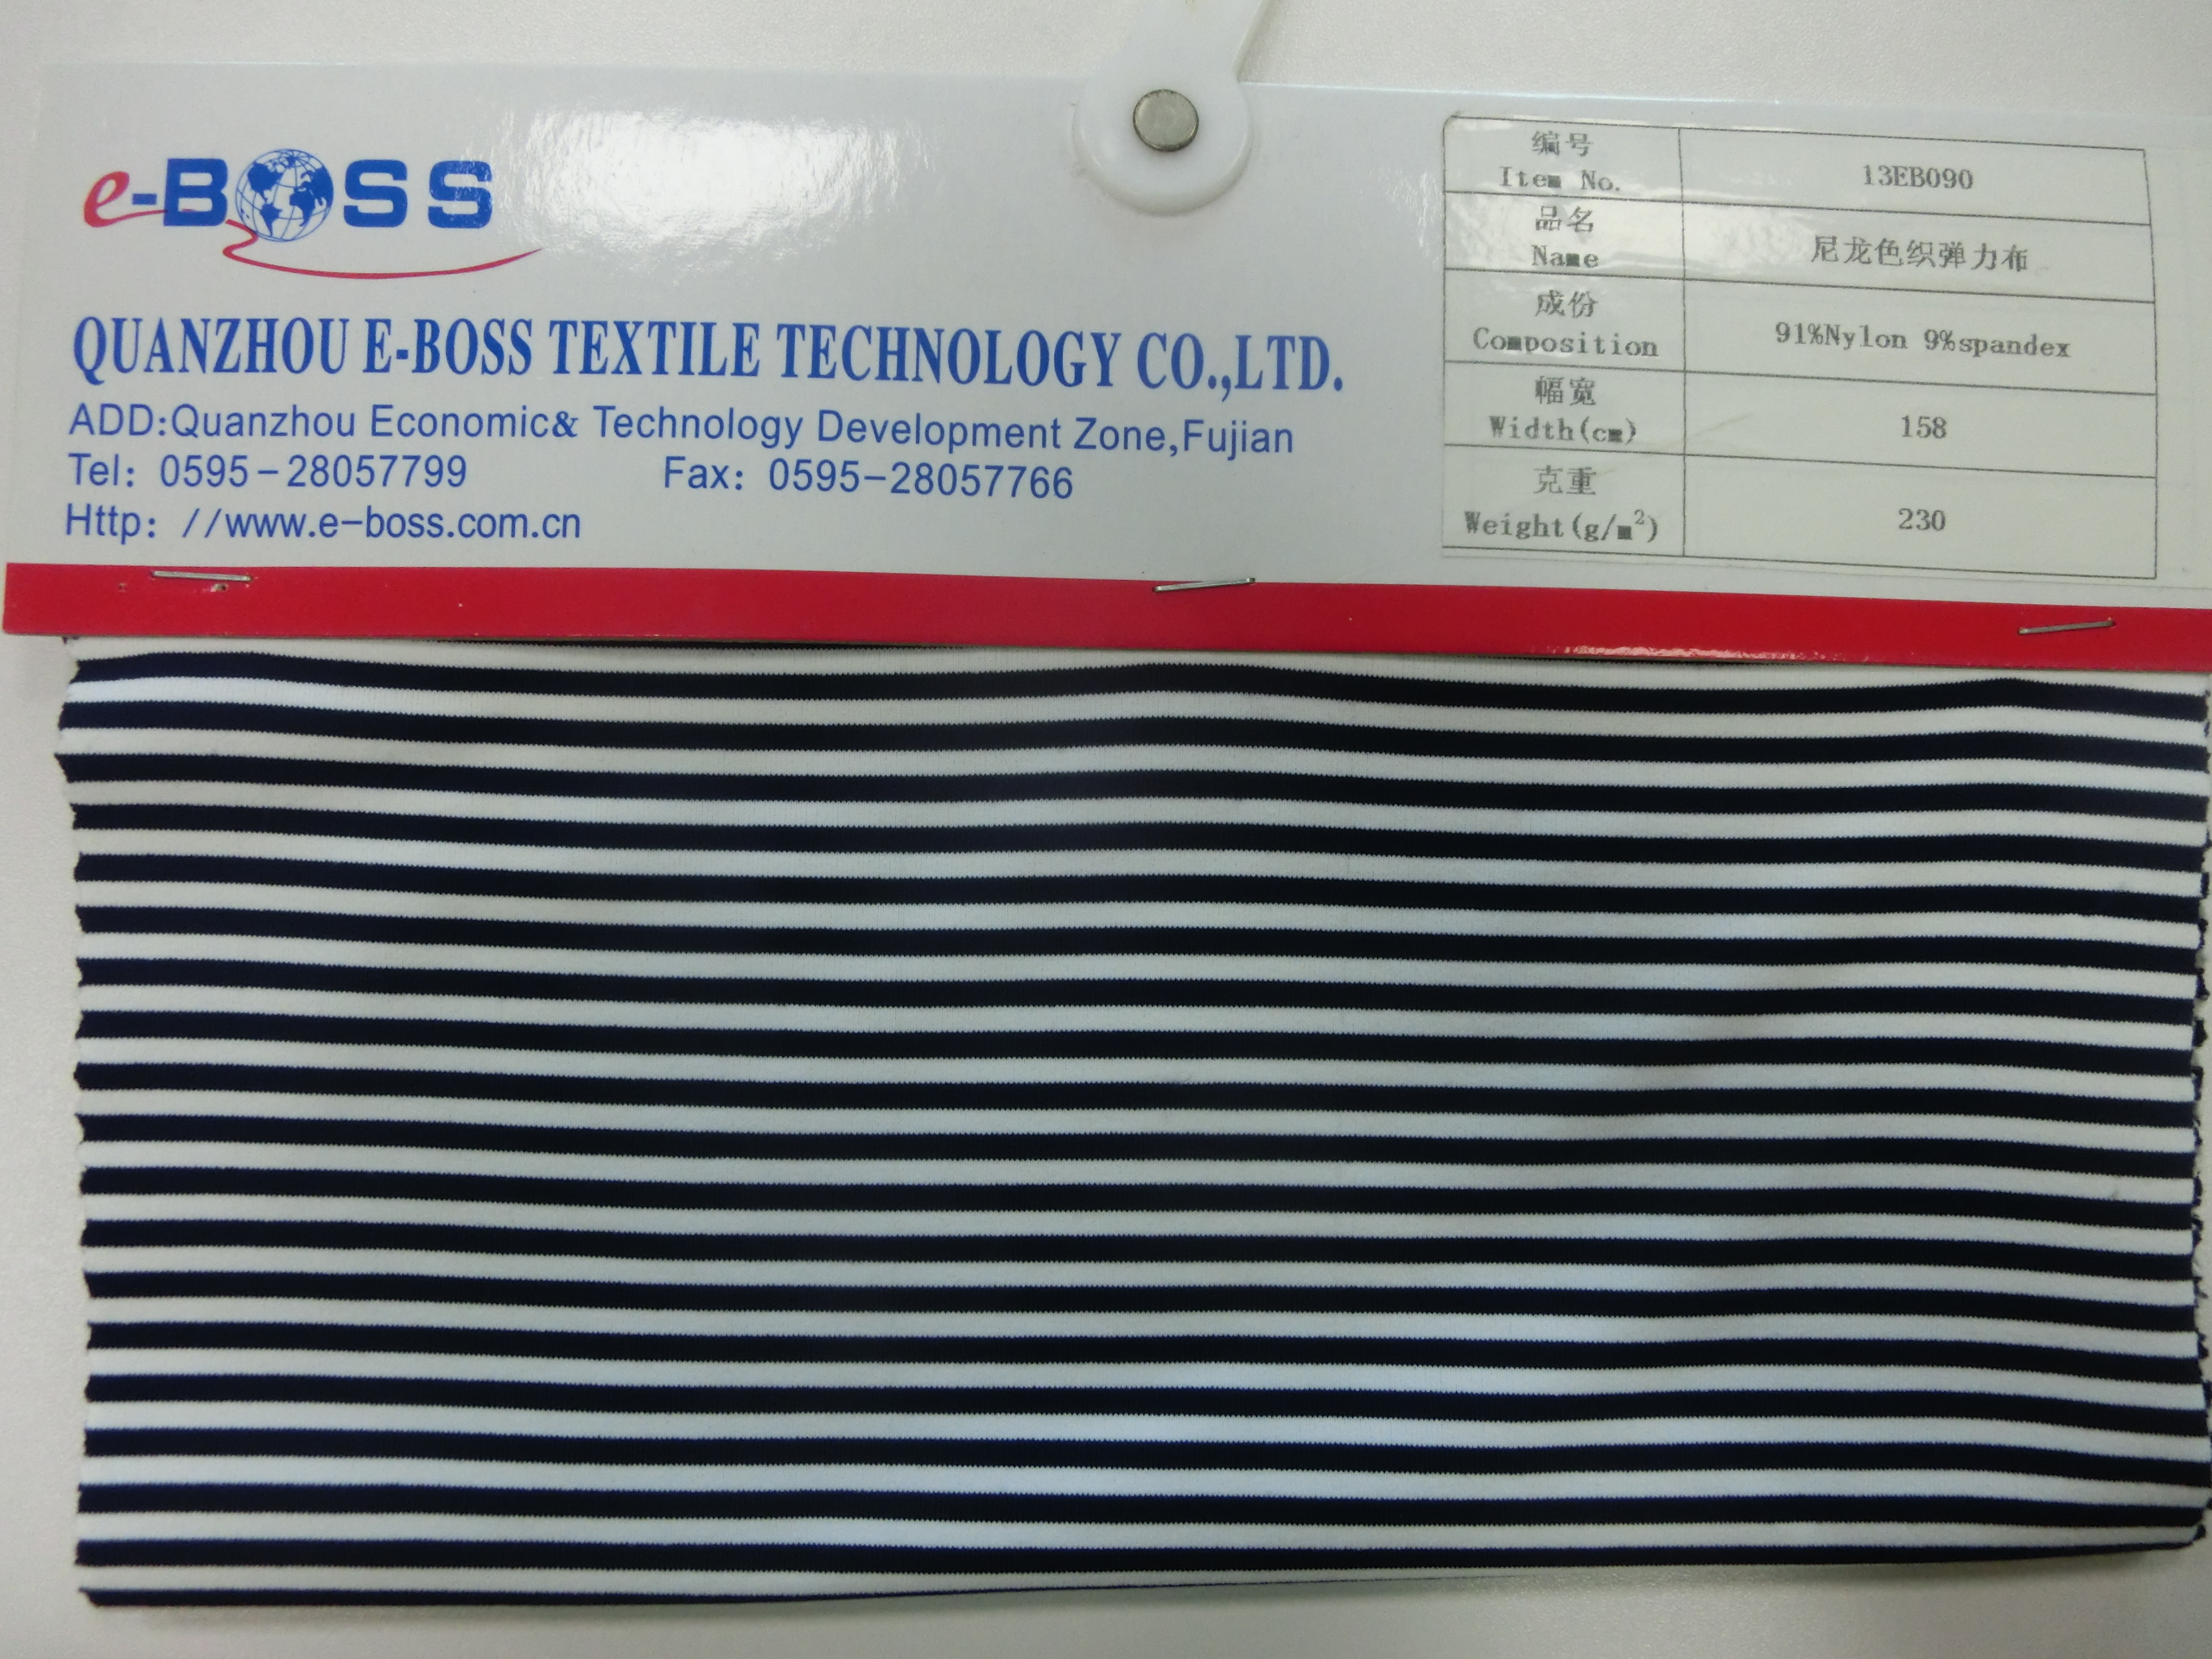 13eB090 91%Nylon 9%Spandex Yarn Dyed Stripe Fabirc for Sportswear 158cmX230gm2 